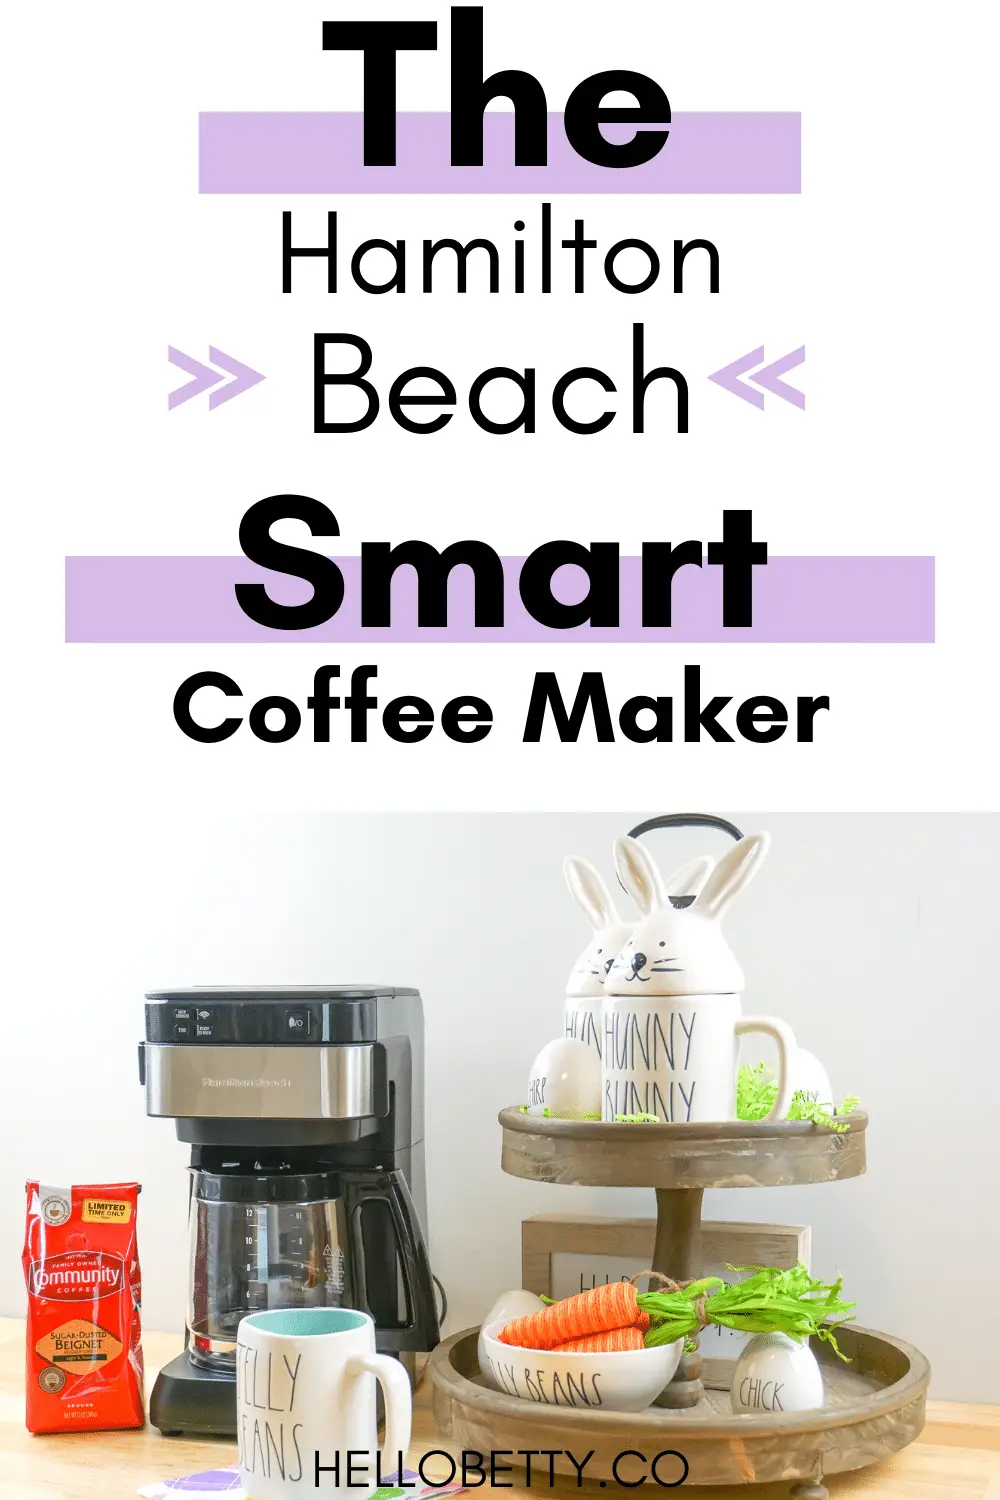 https://hellobetty.co/wp-content/uploads/2020/04/Hamilton-Beach-Smart-Coffee-Maker.png